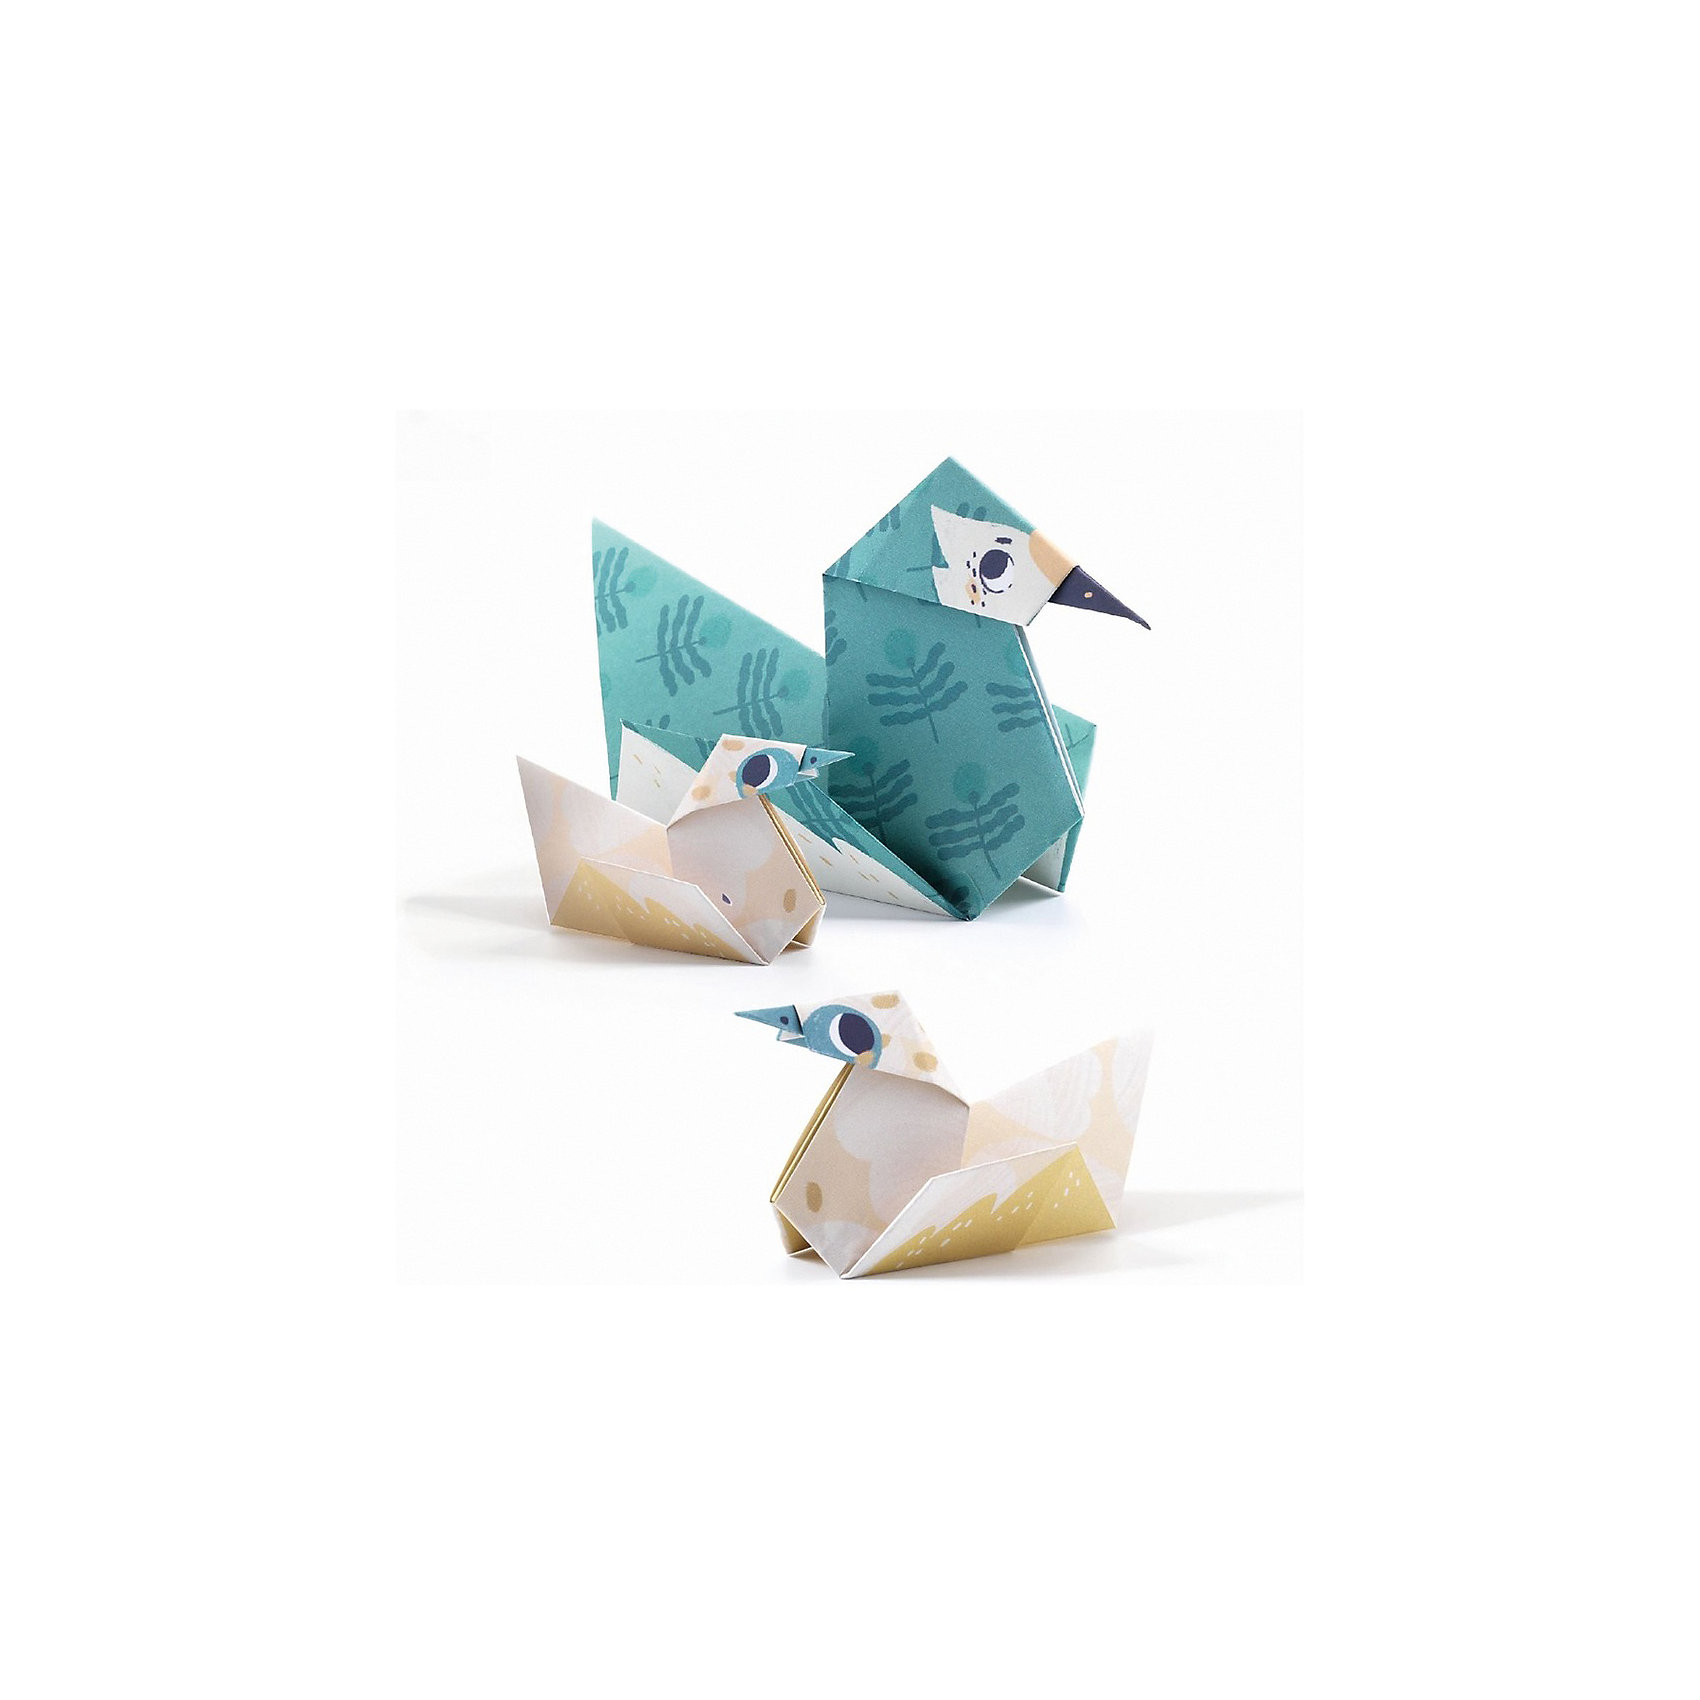 фото Набор для оригами djeco семьи